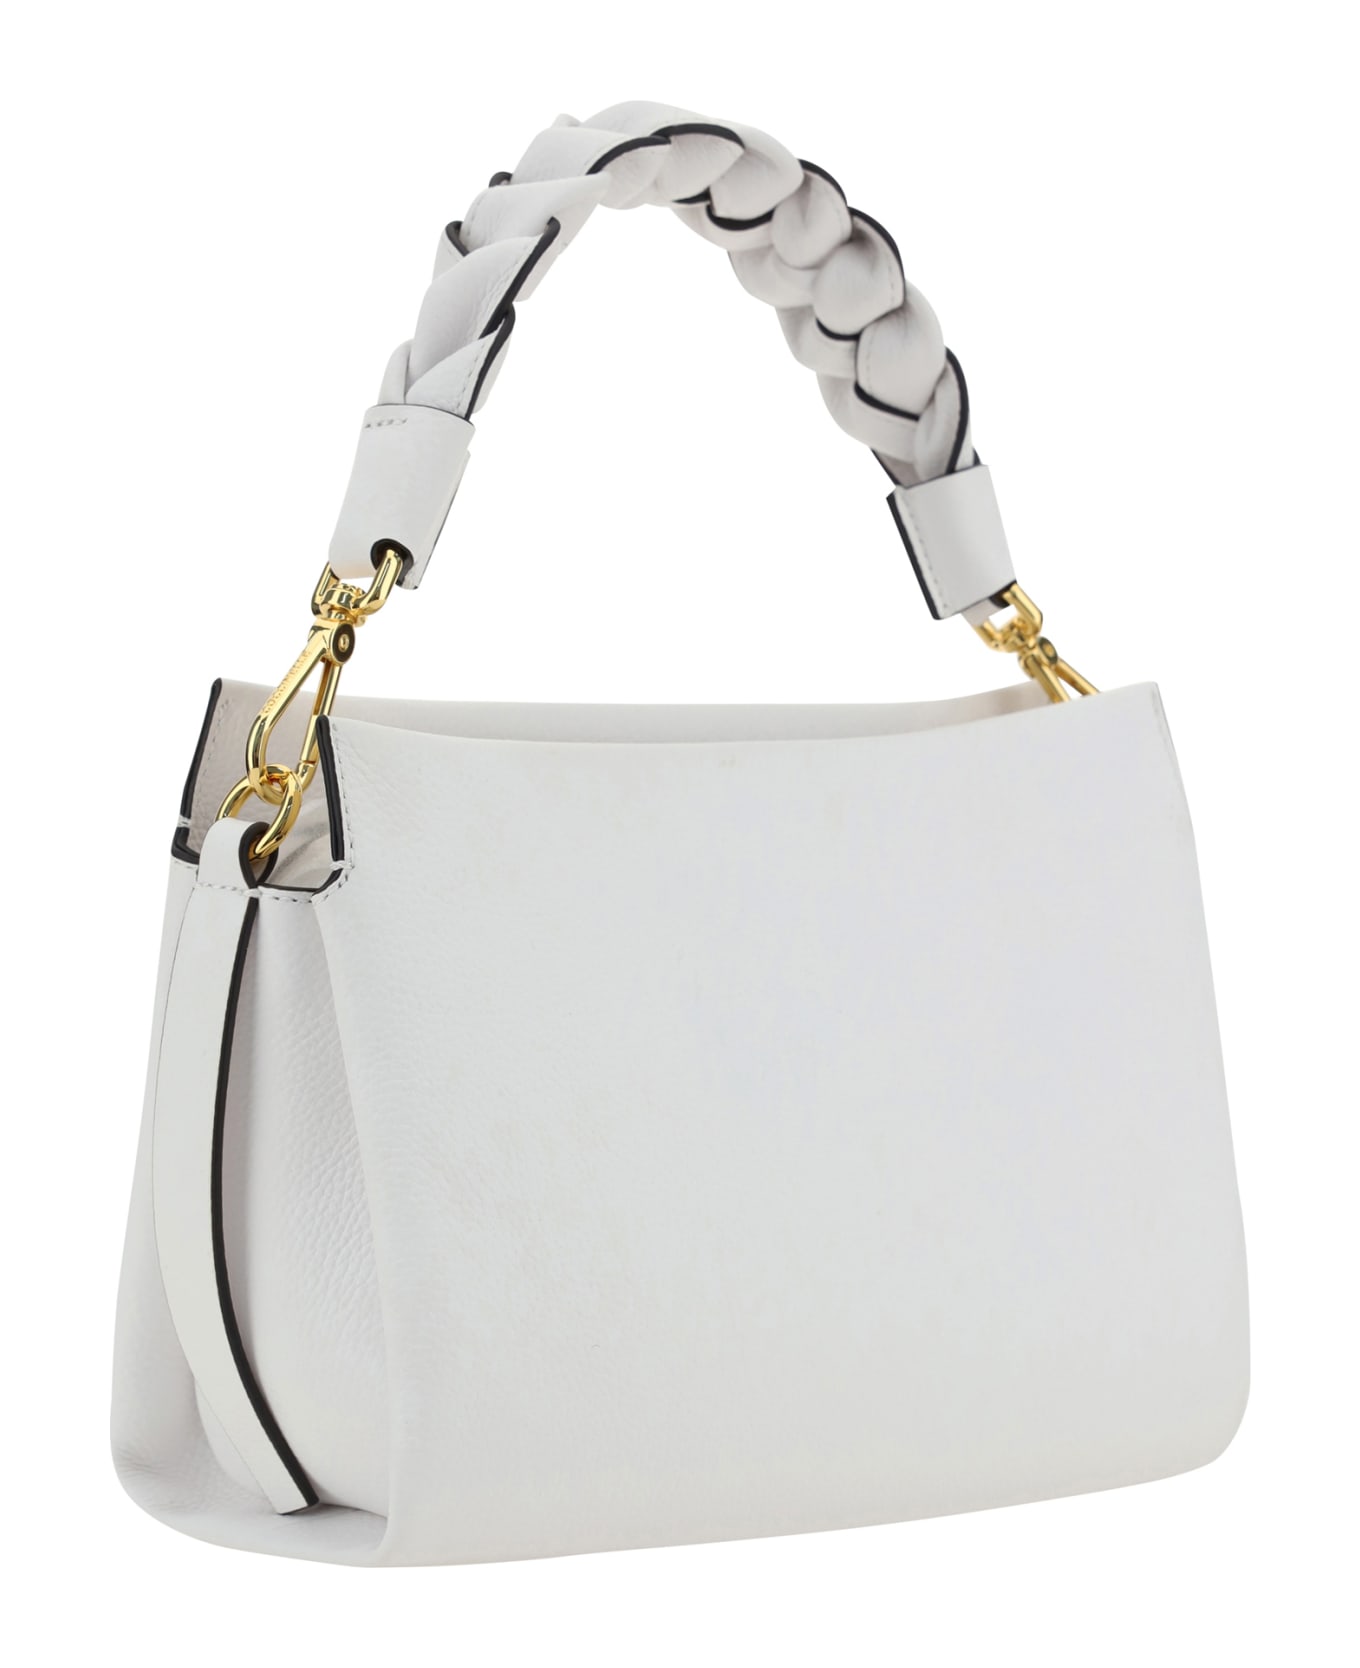 Coccinelle Boheme Handbag - White